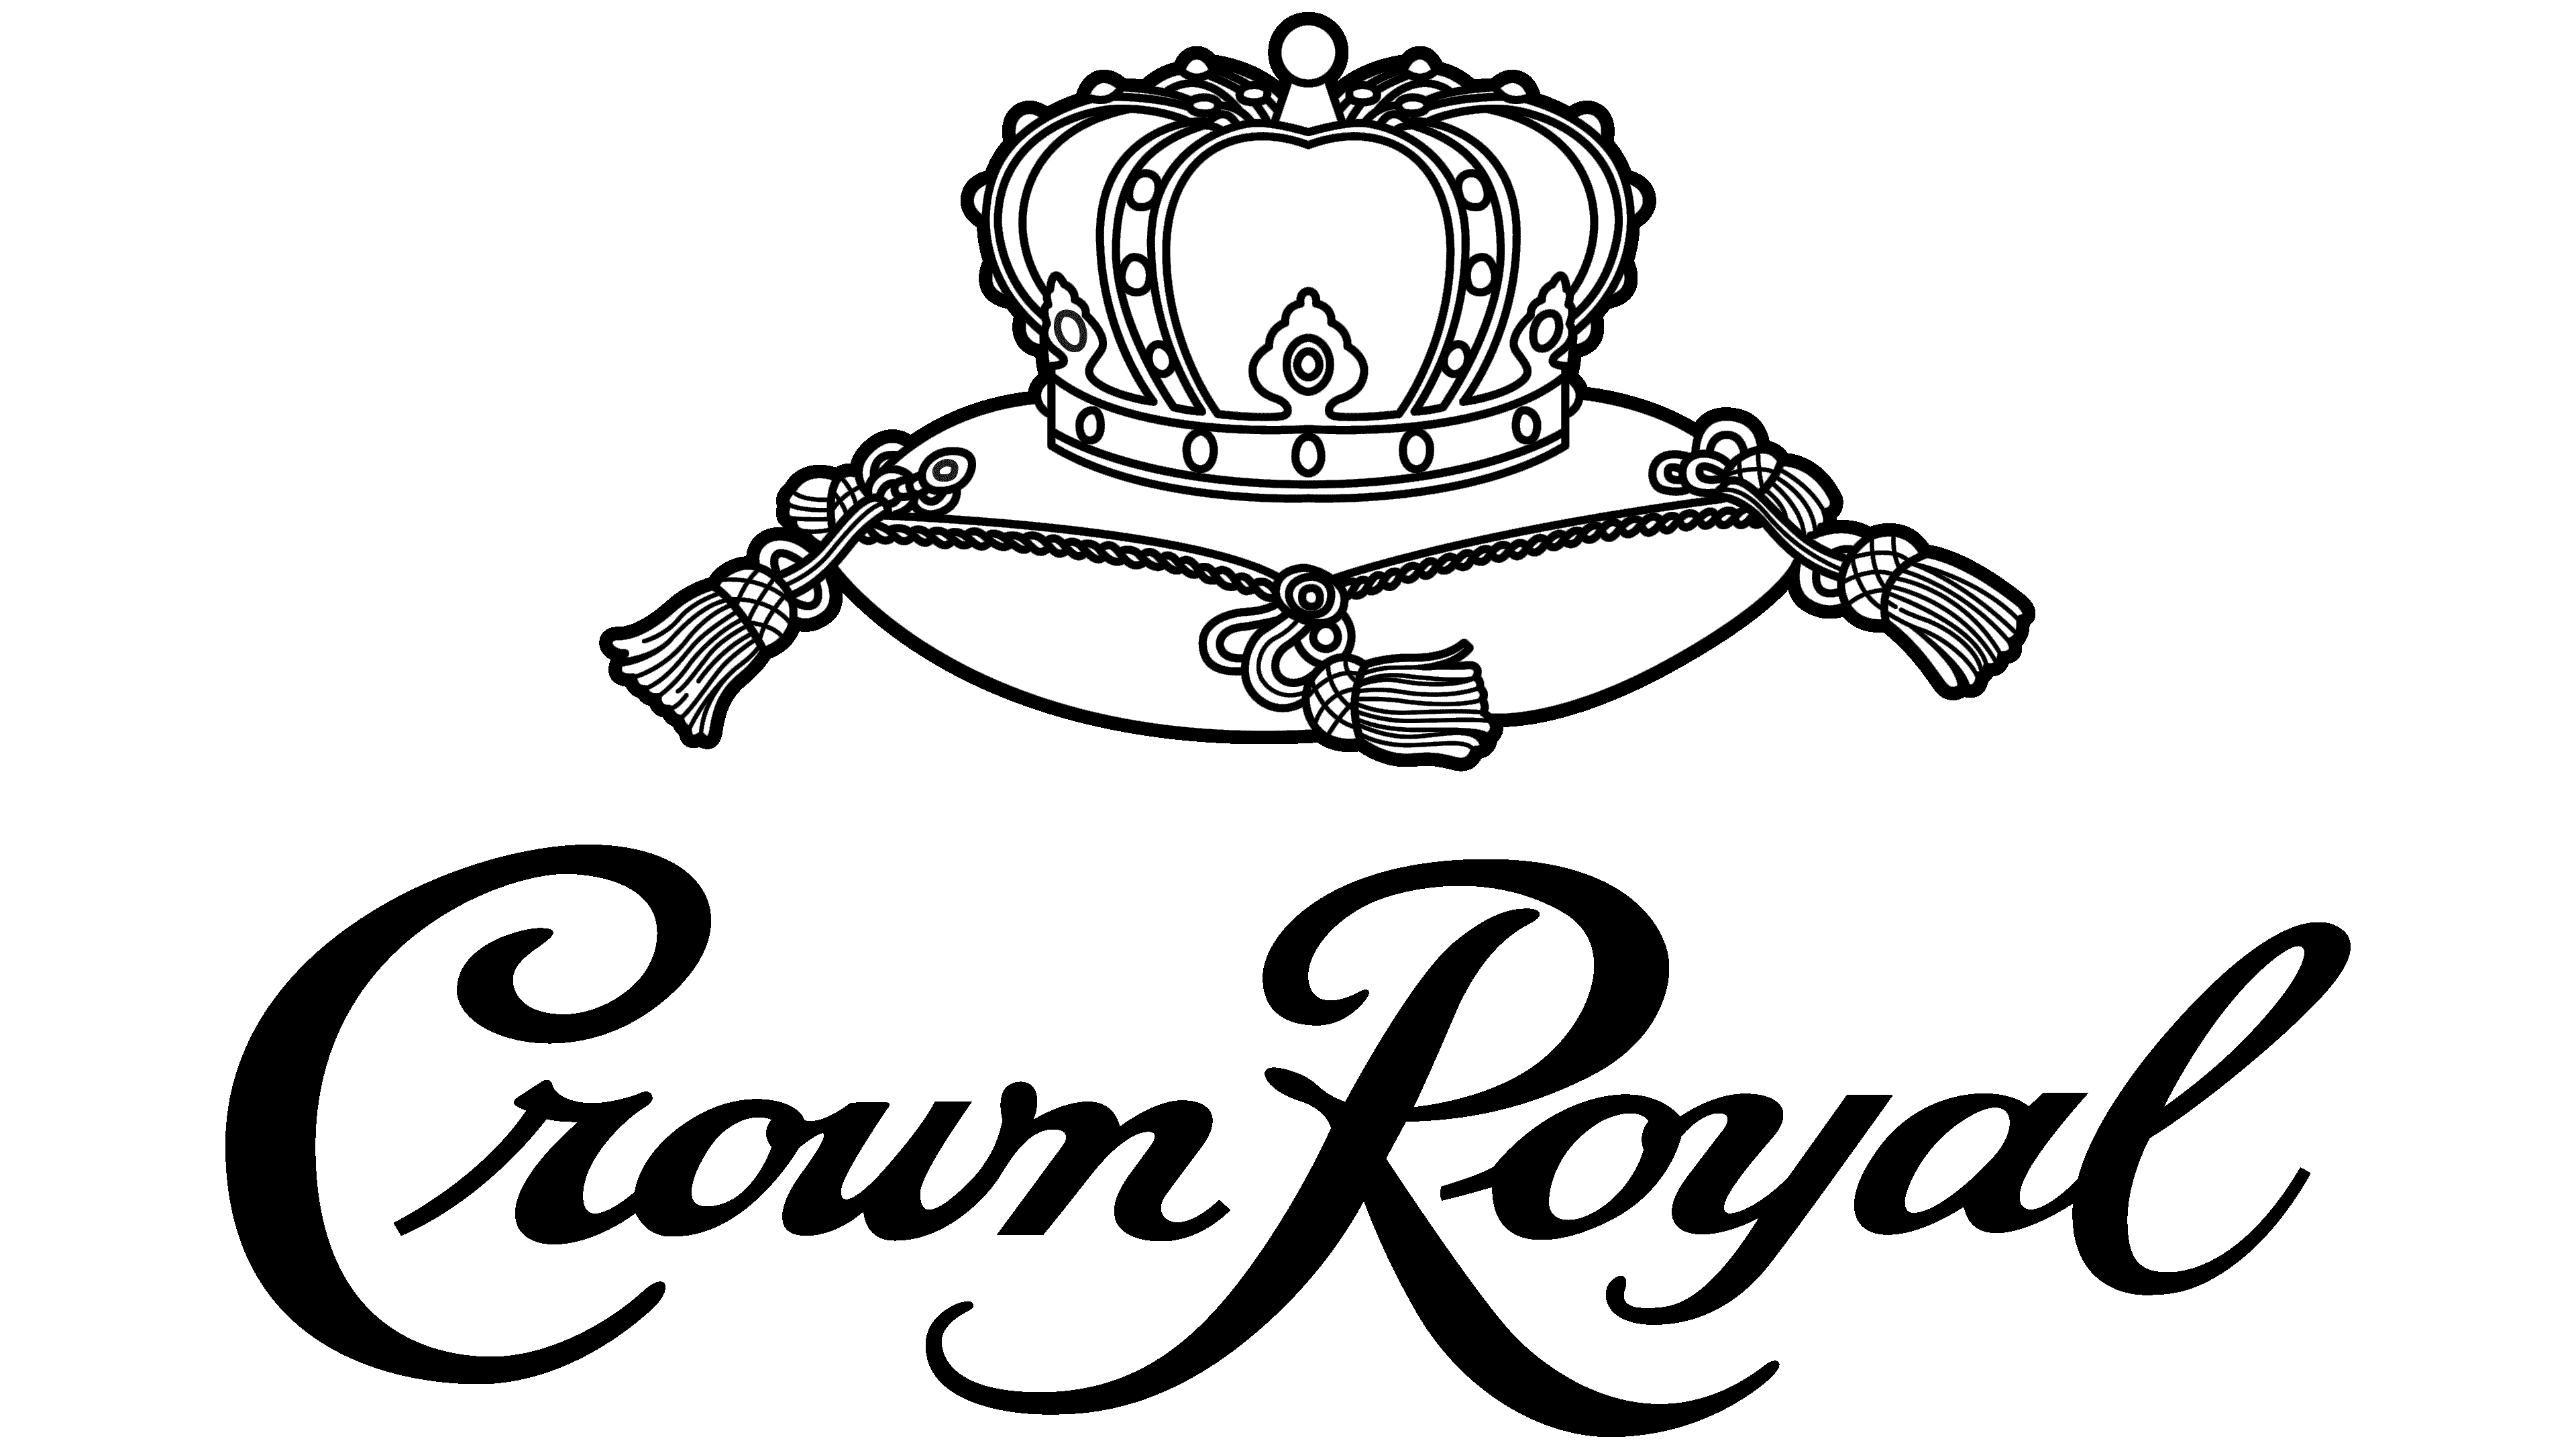 Total 67+ imagen crown royal background - Thptletrongtan.edu.vn